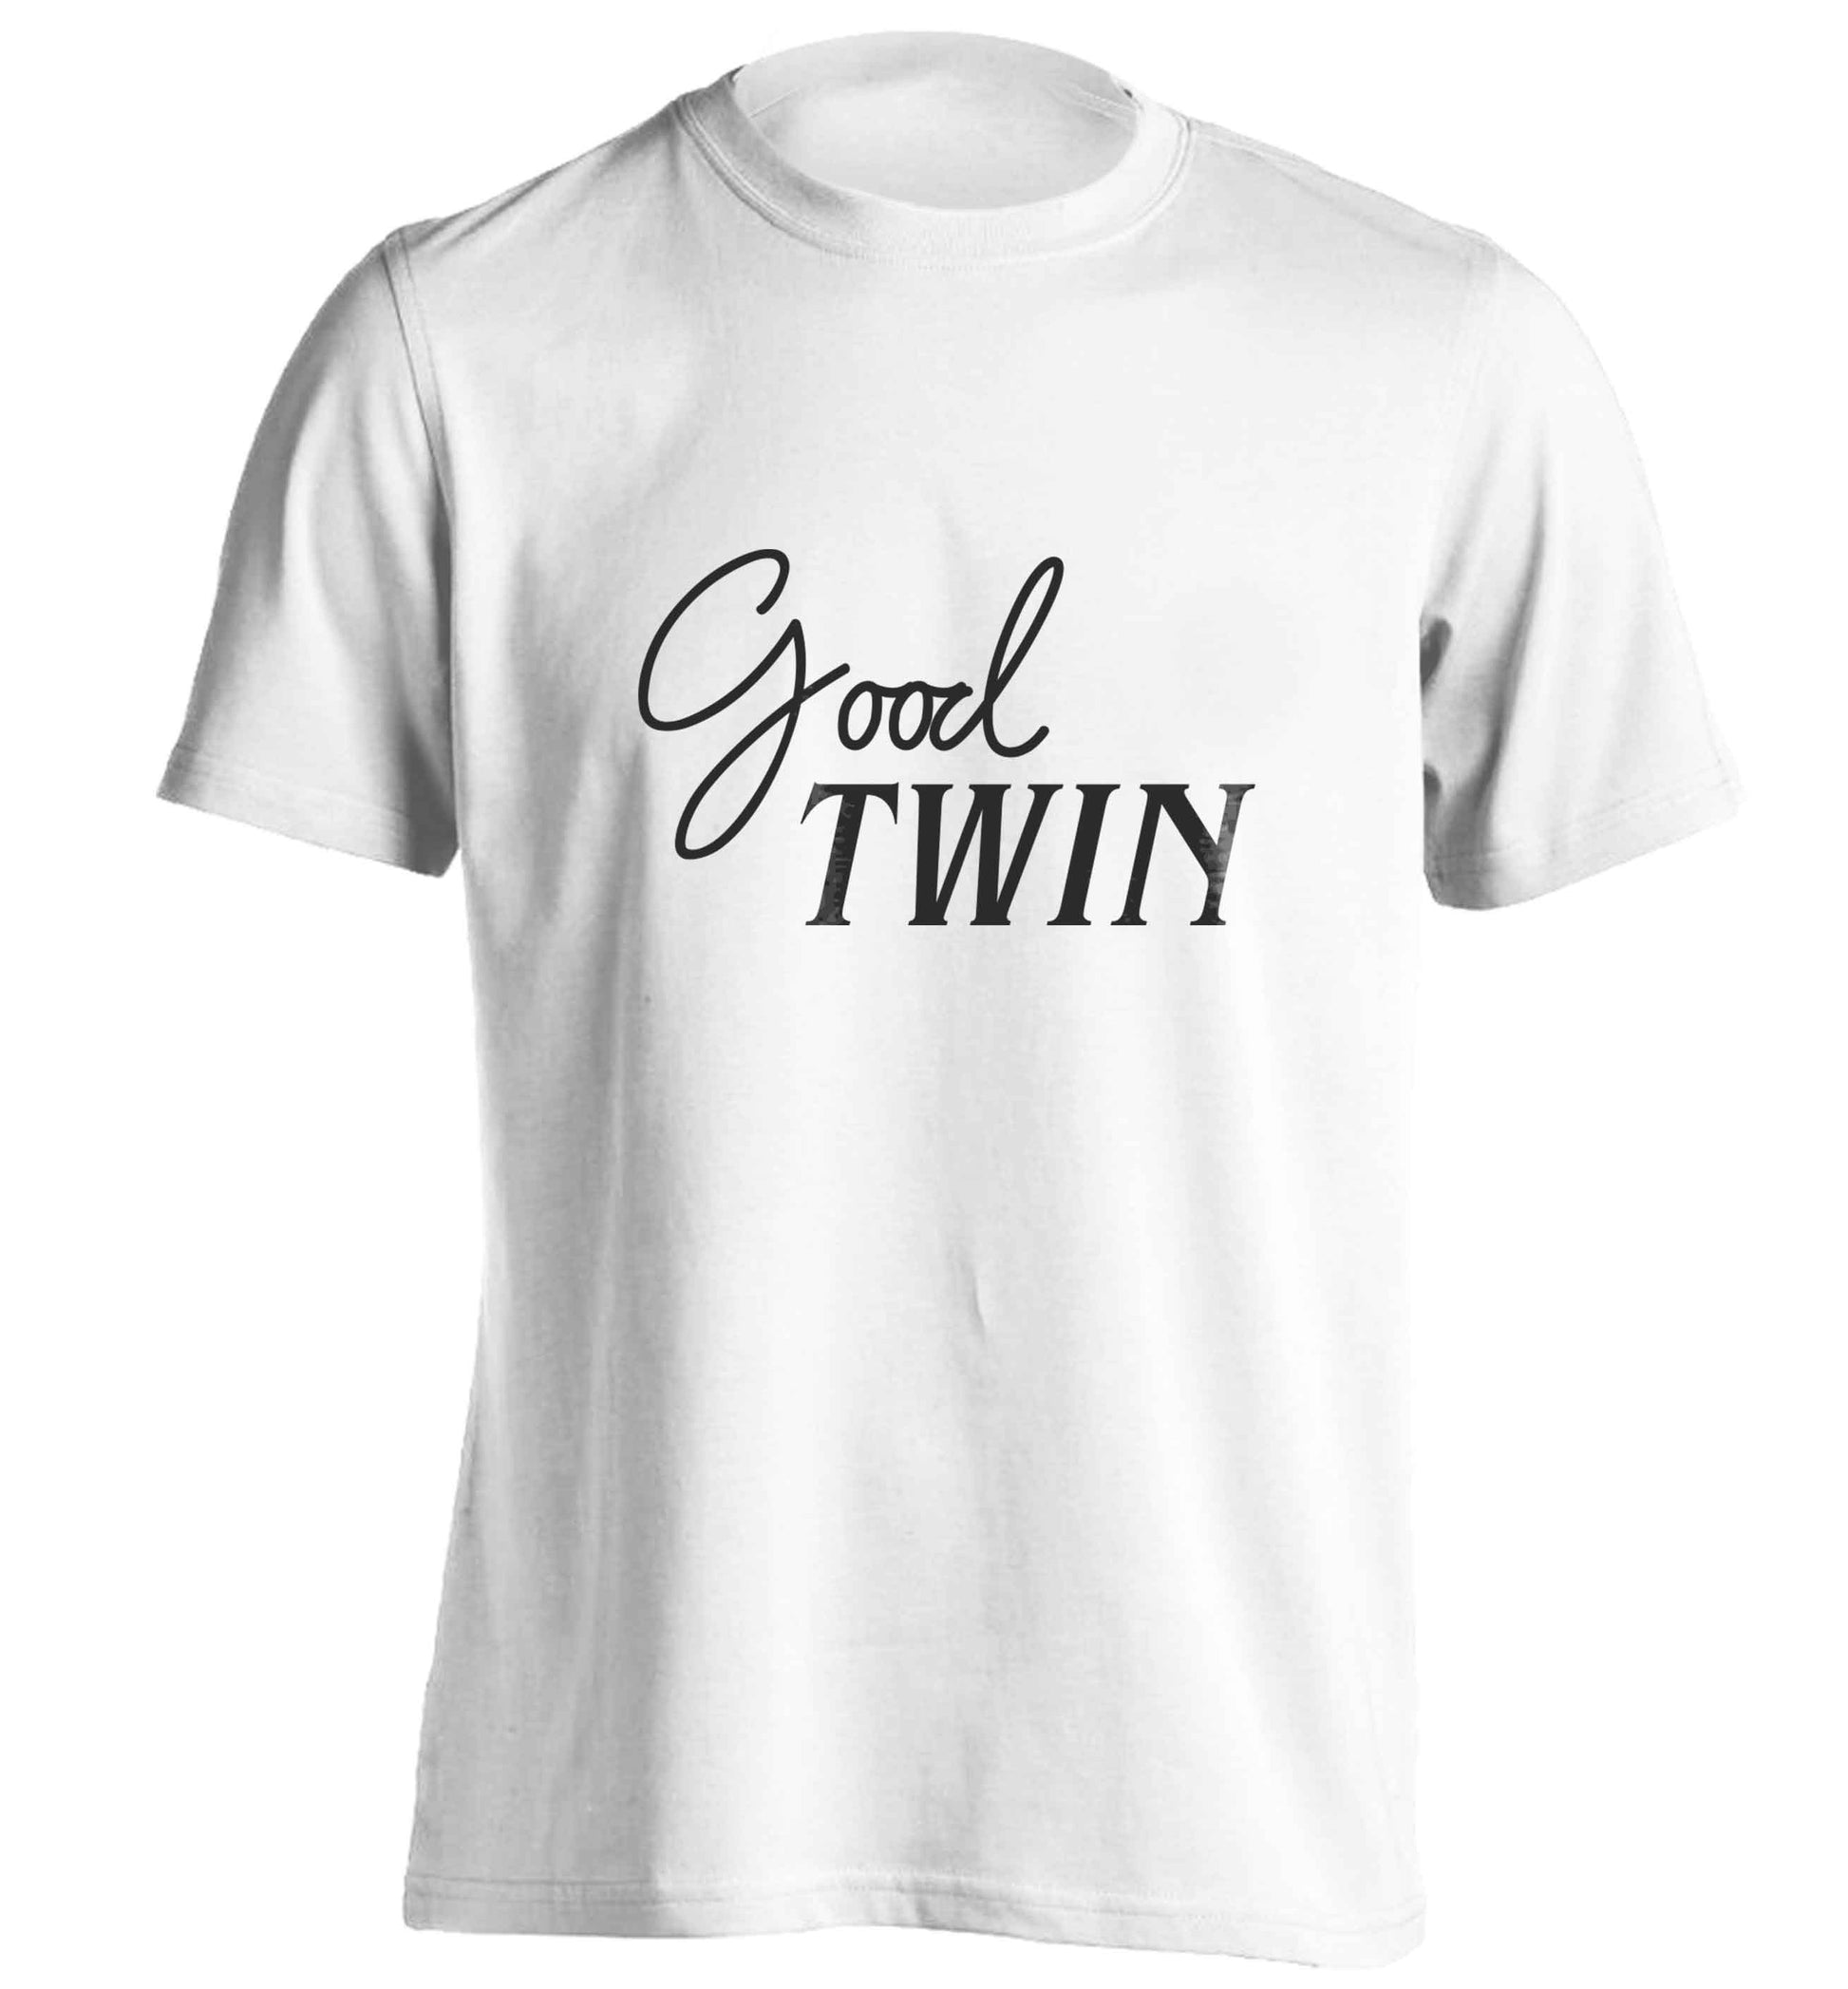 Good twin adults unisex white Tshirt 2XL